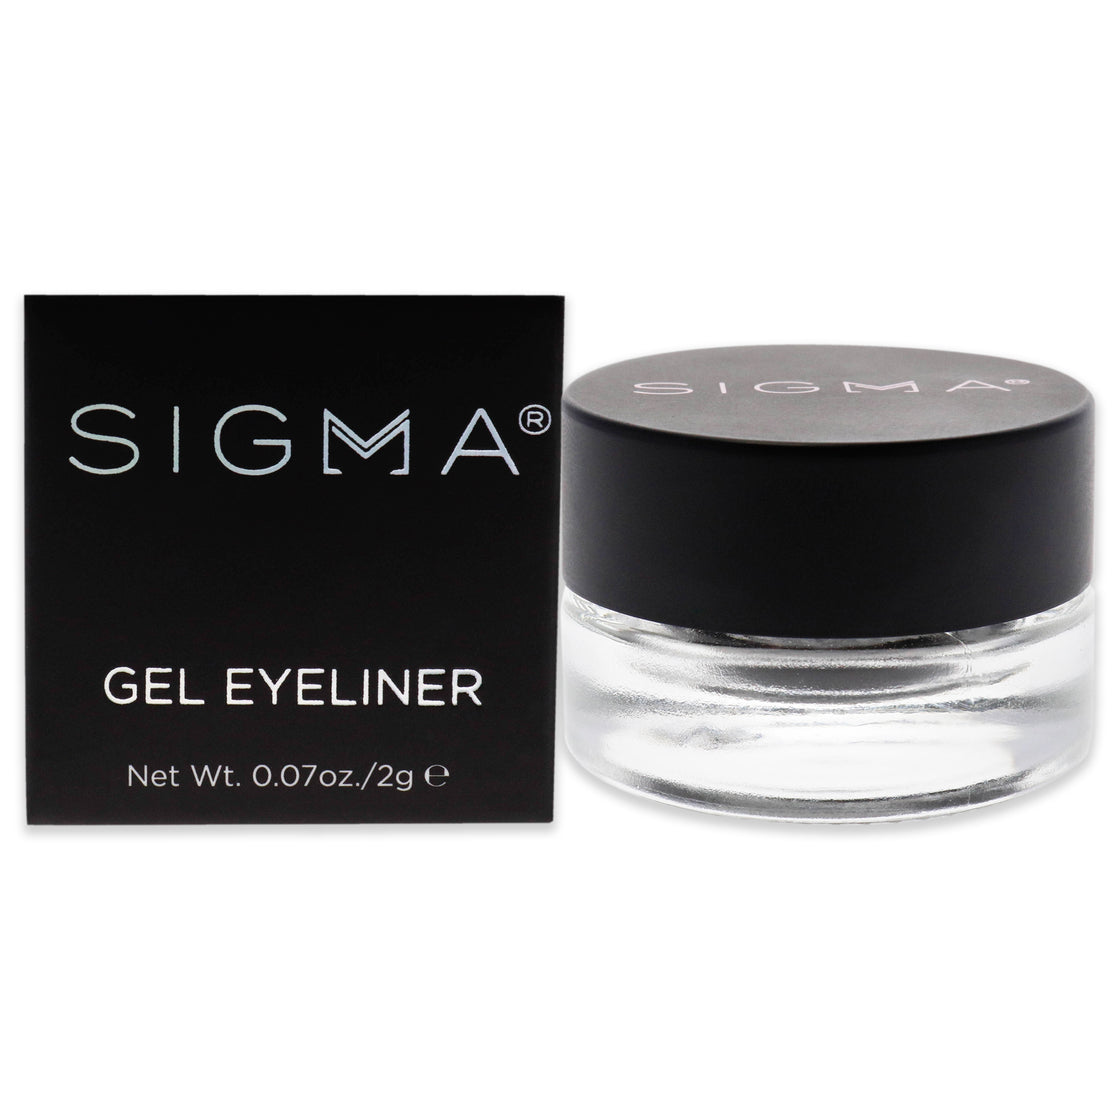 Gel Eyeliner - Wicked by SIGMA for Women - 0.07 oz Eyeliner